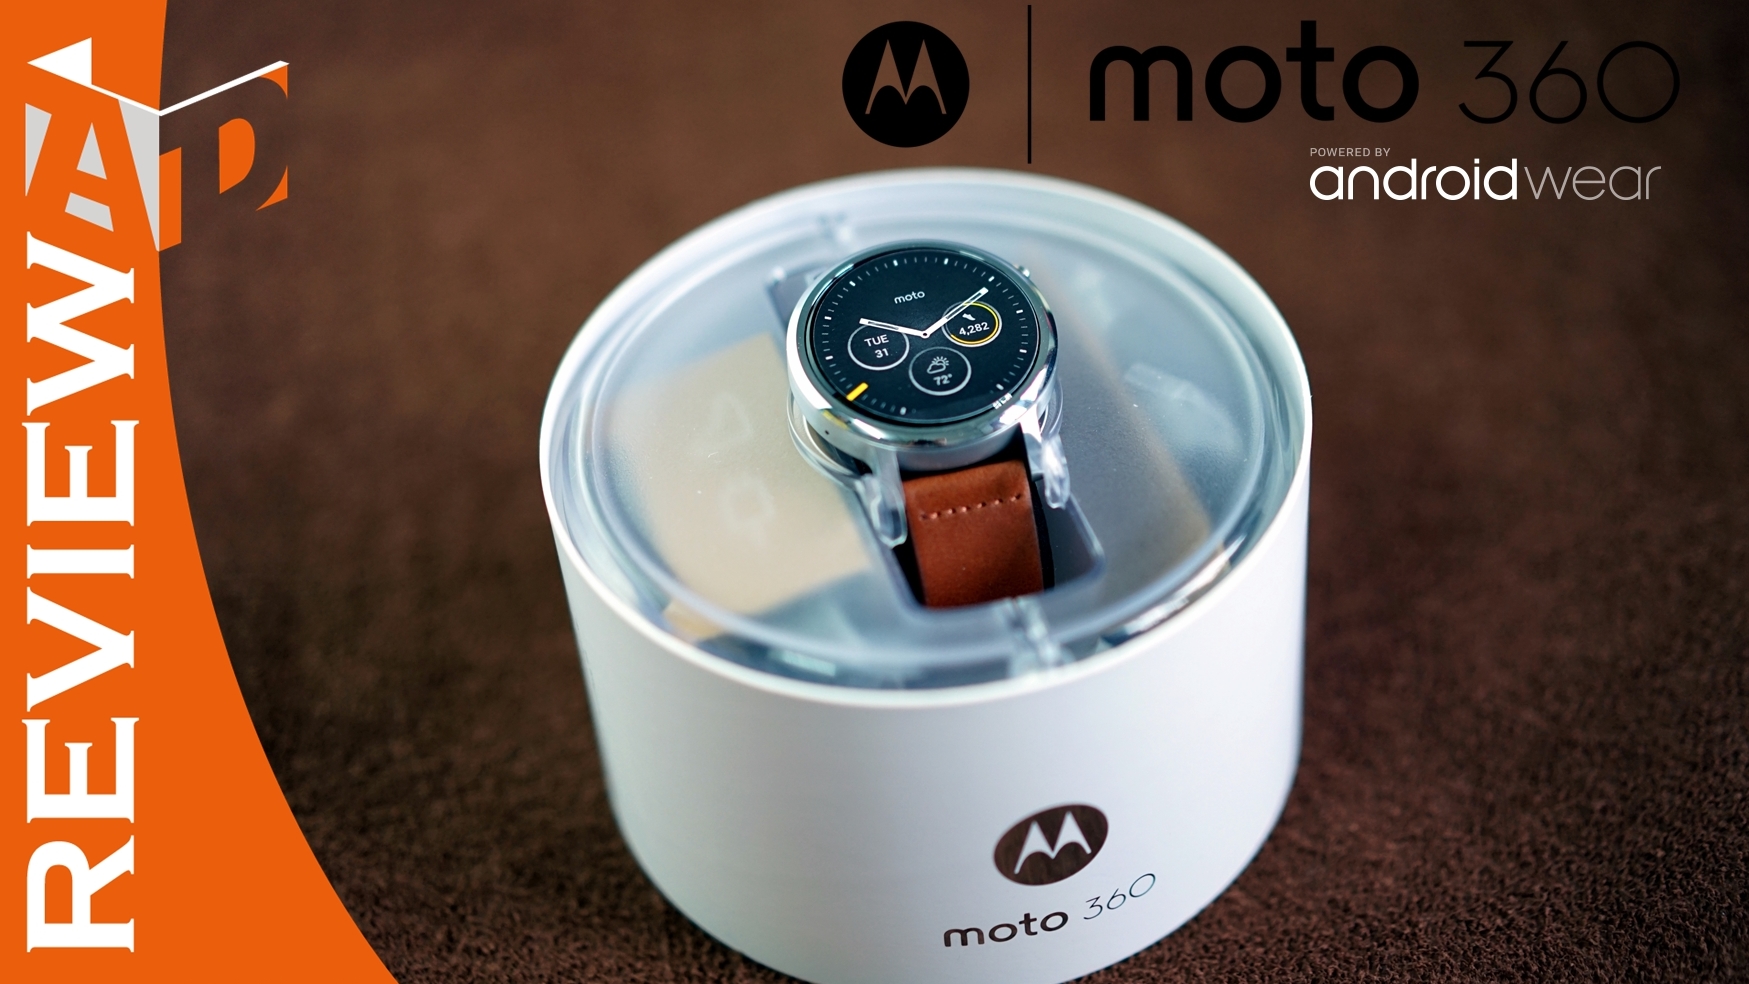 Moto 360 gen review | android wear | รีวิว Moto 360 (Gen 2) น่าใช้ที่สุด สำหรับความเป็นสมาร์ทวอทช์ในระบบ Android Wear